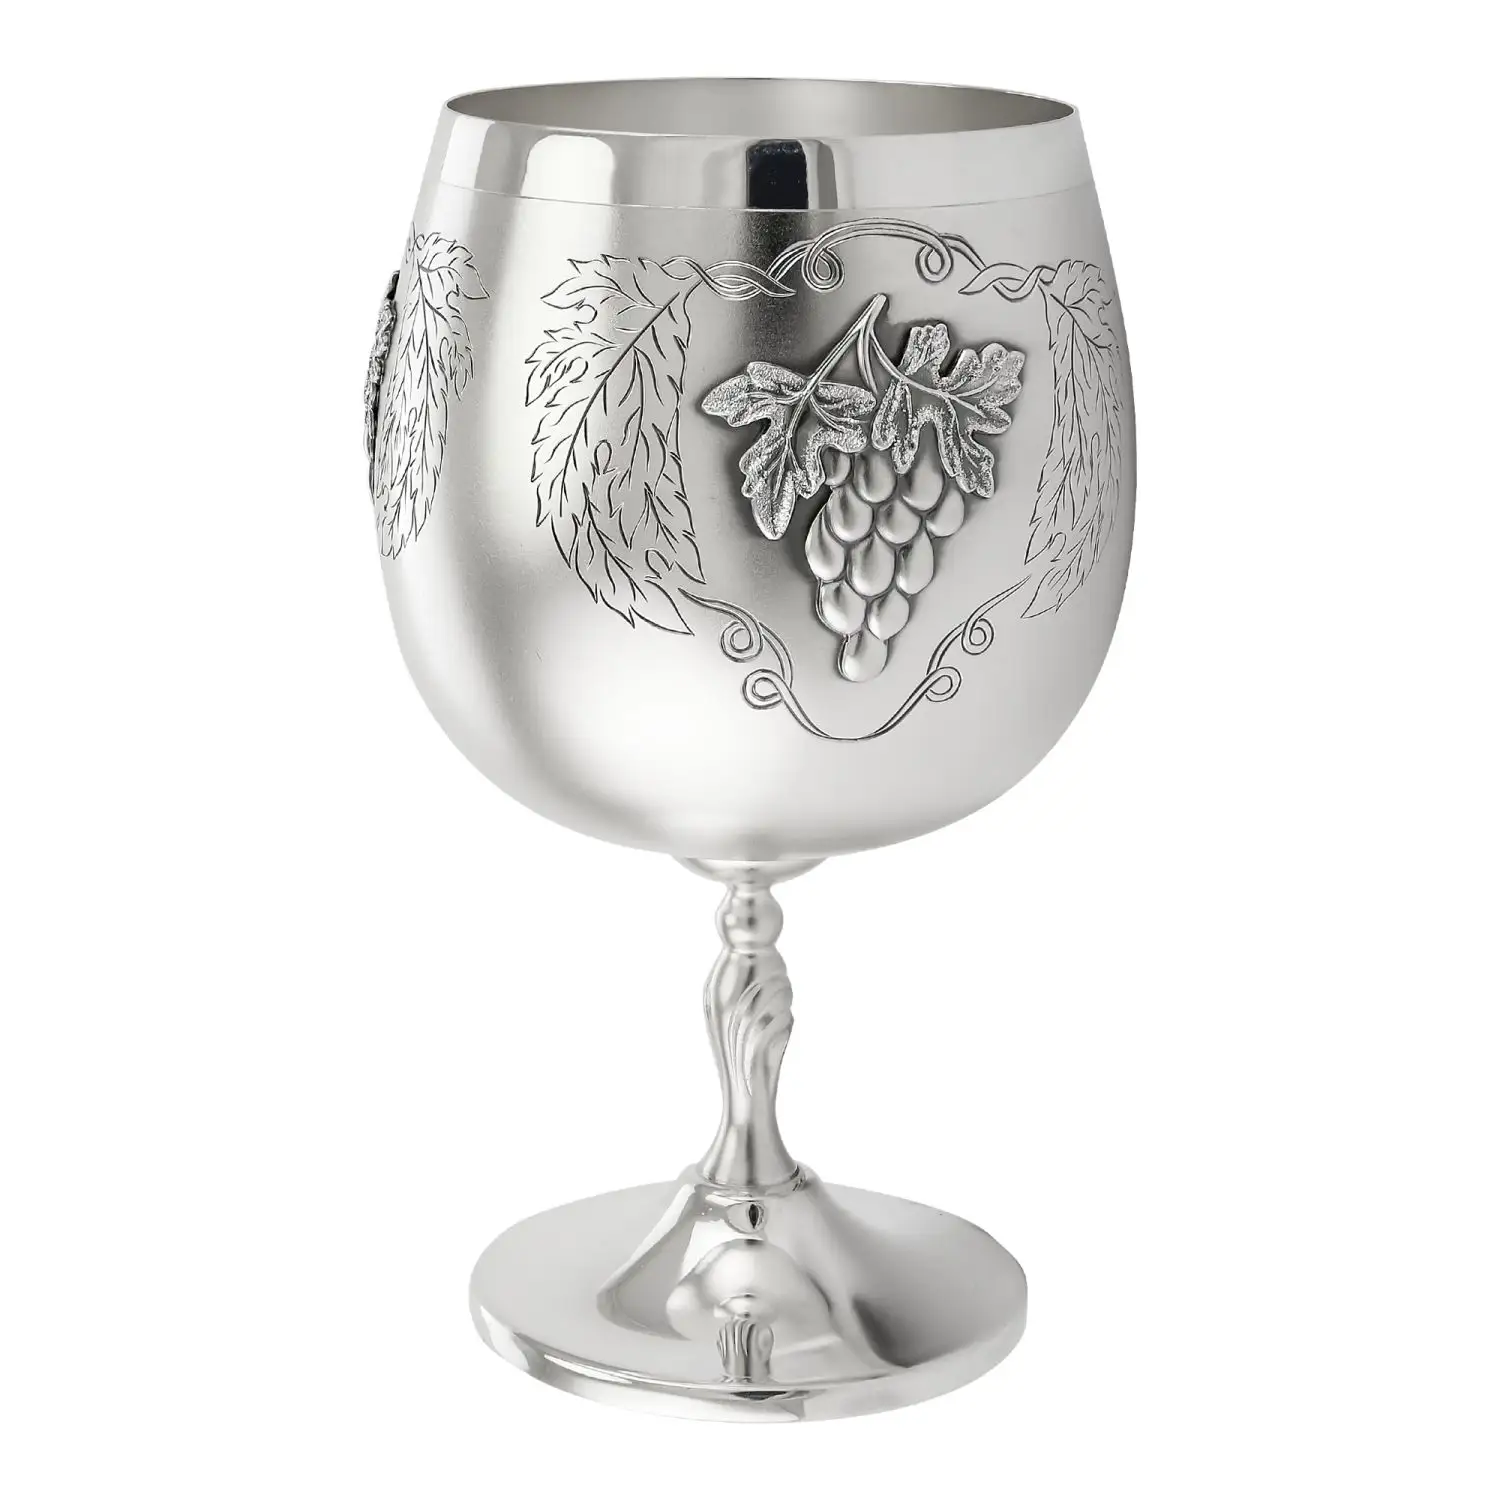 Бокал для коньяка Виноградная лоза (Серебро 925) ваза для меда виноградная лоза серебро 925